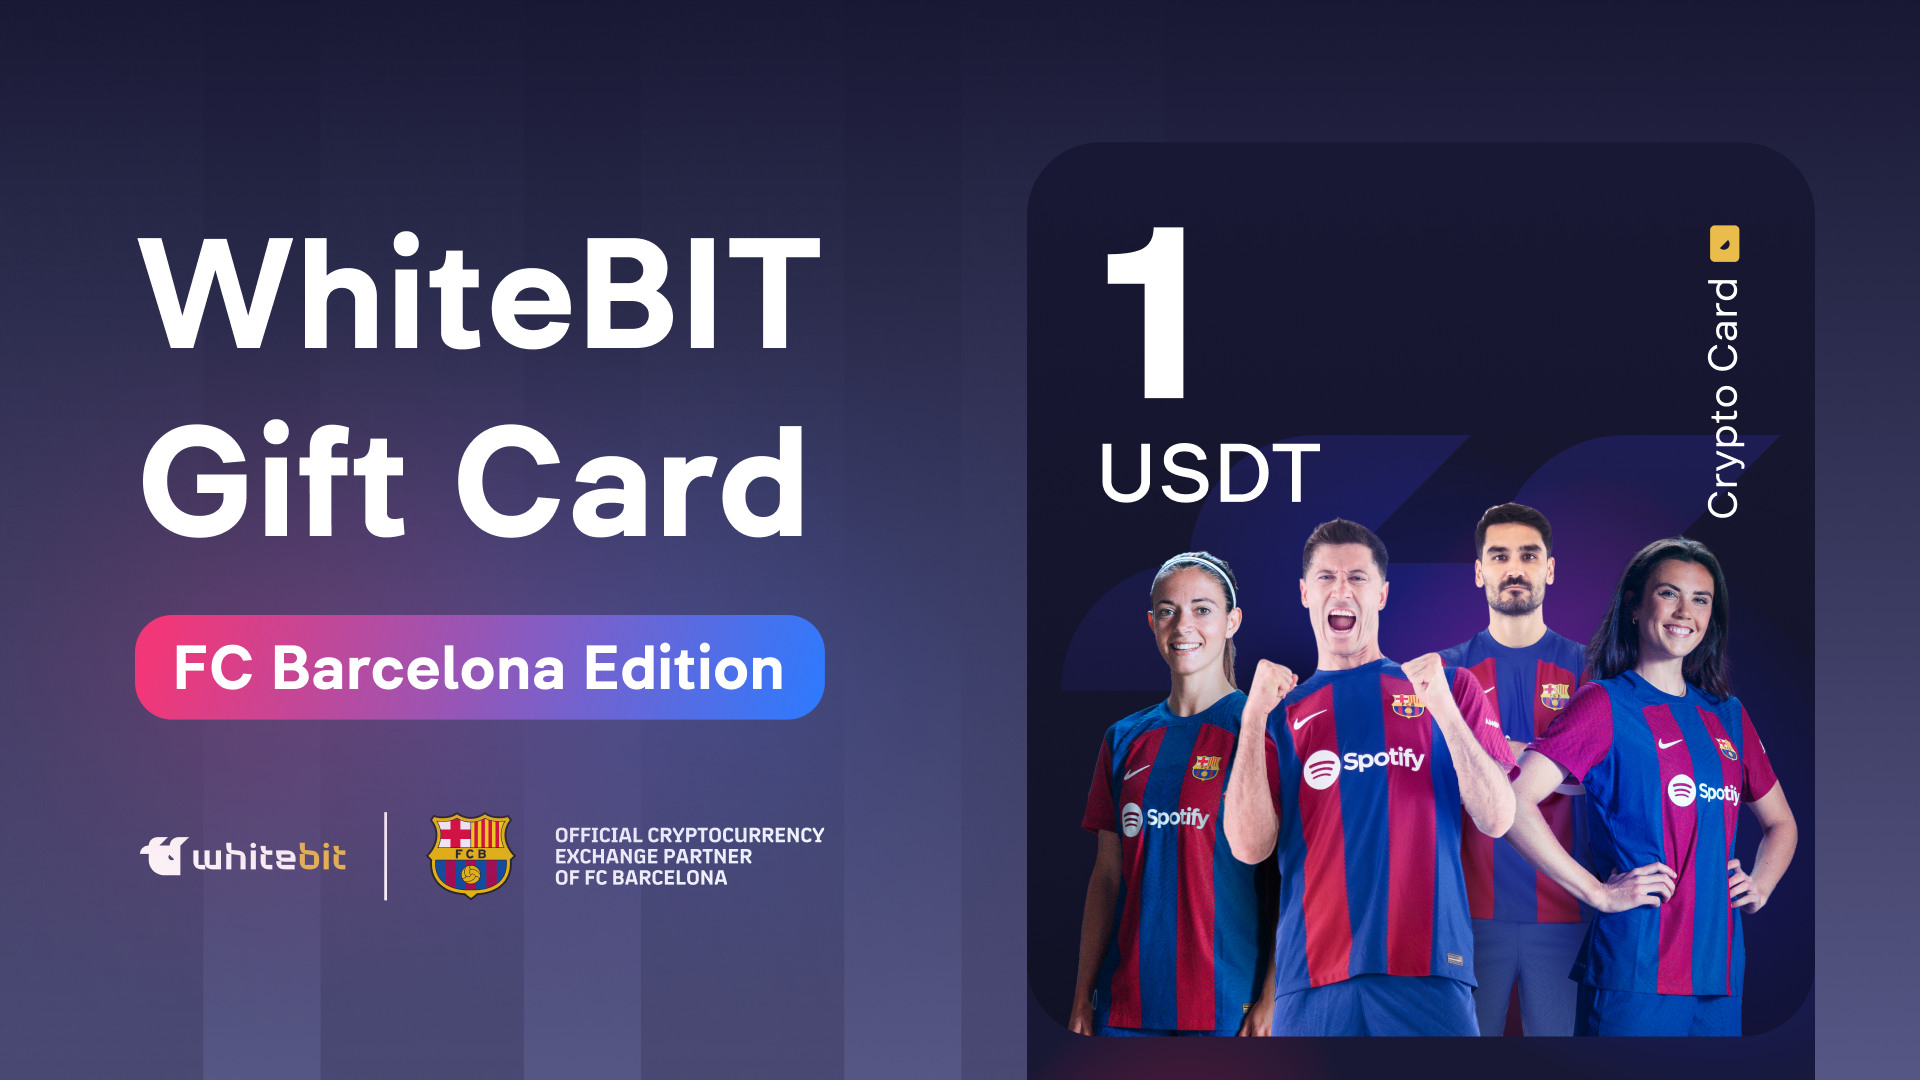 WhiteBIT - FC Barcelona Edition - 1 USDT Gift Card